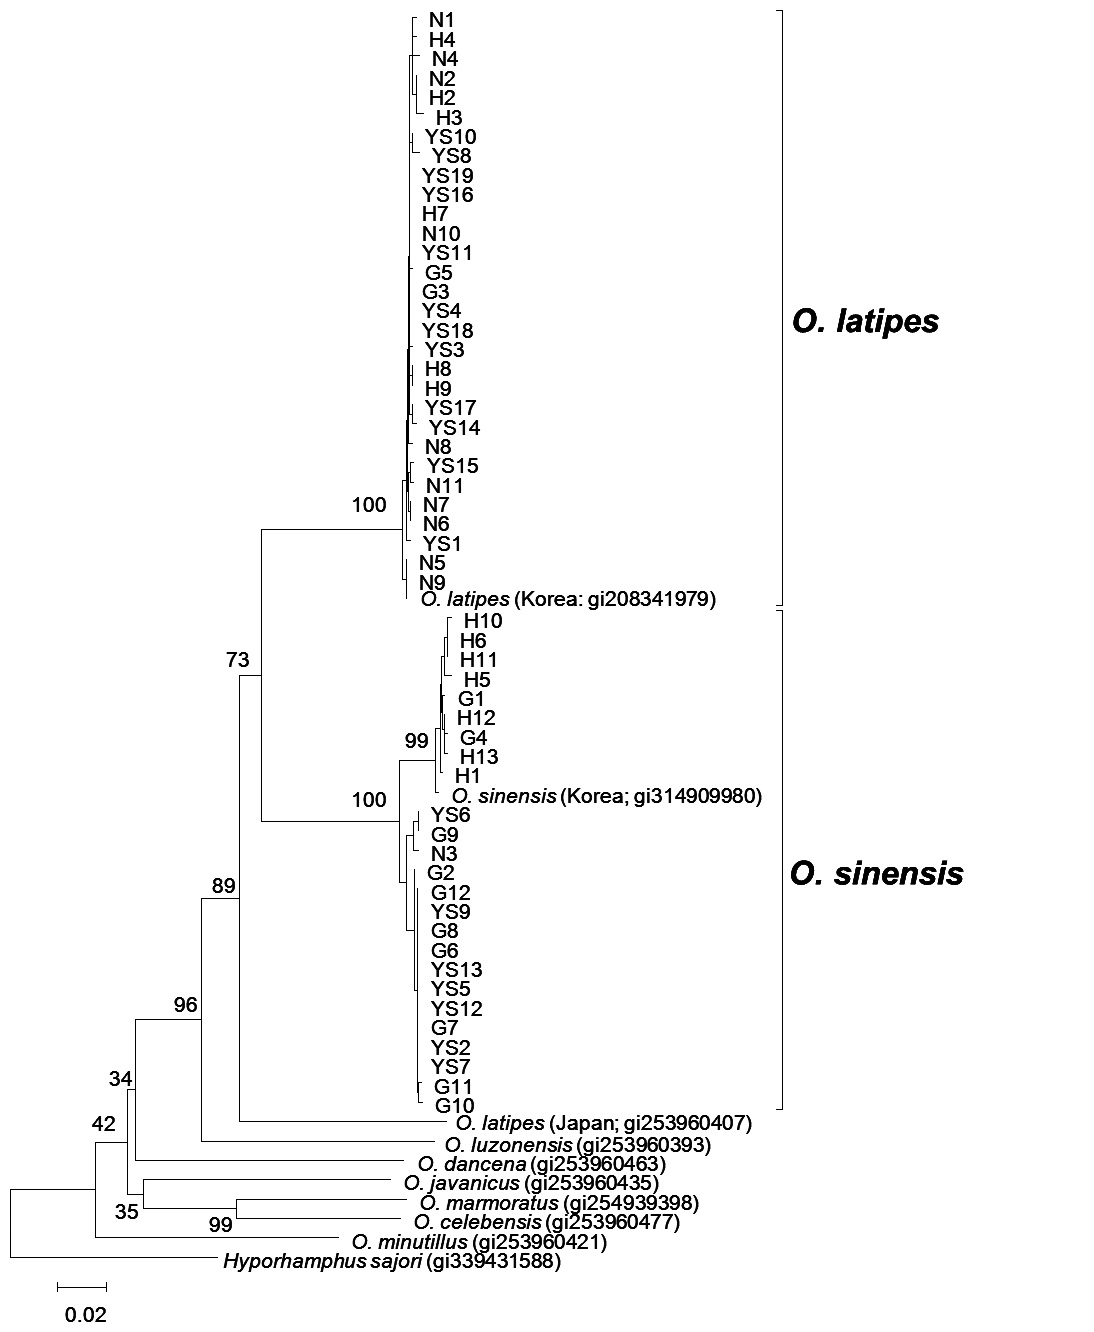 Molecular phylogeny of Oryzias species using the Neighbor-joining method in MEGA5.